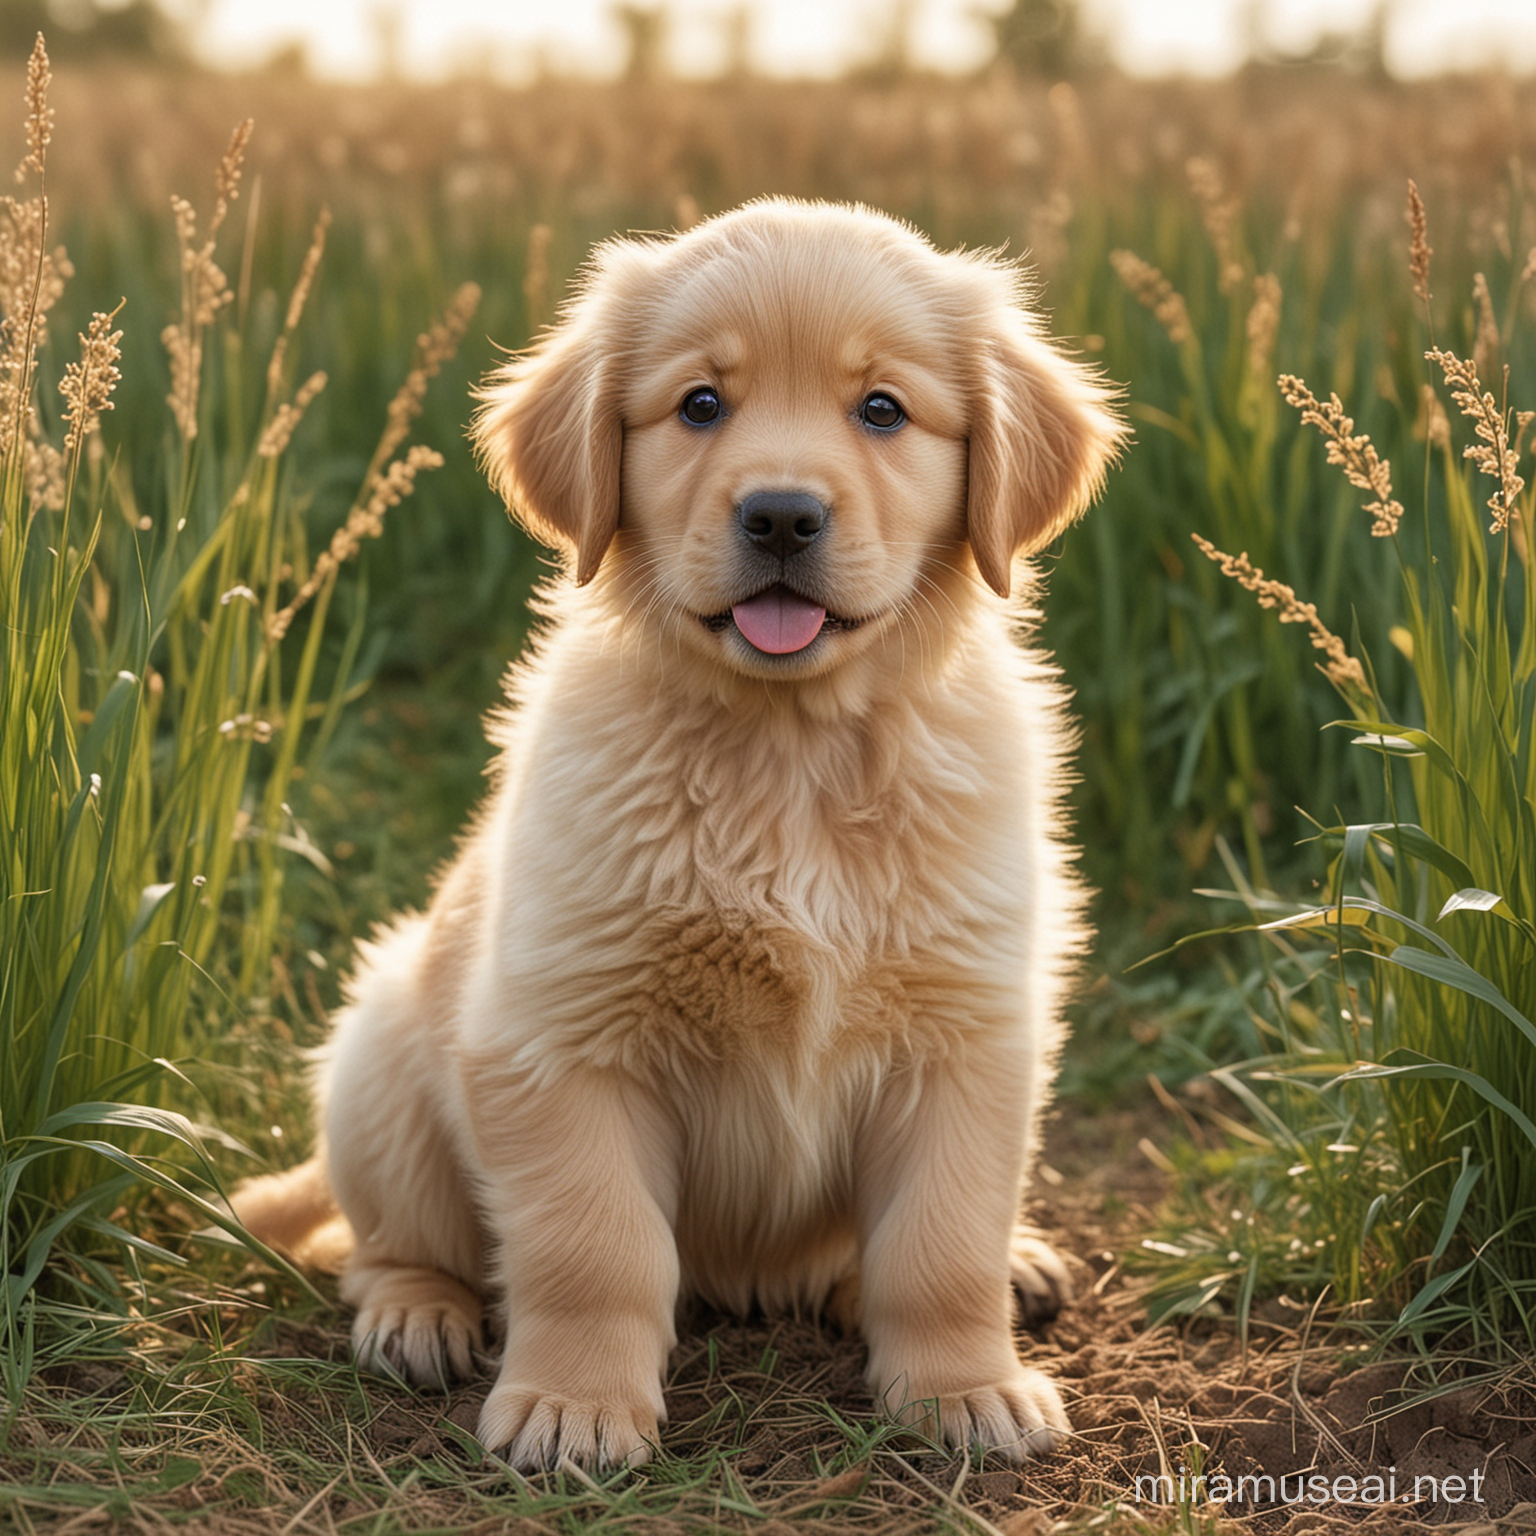 Adorable Golden Retriever Puppy Sitting in Short Grass